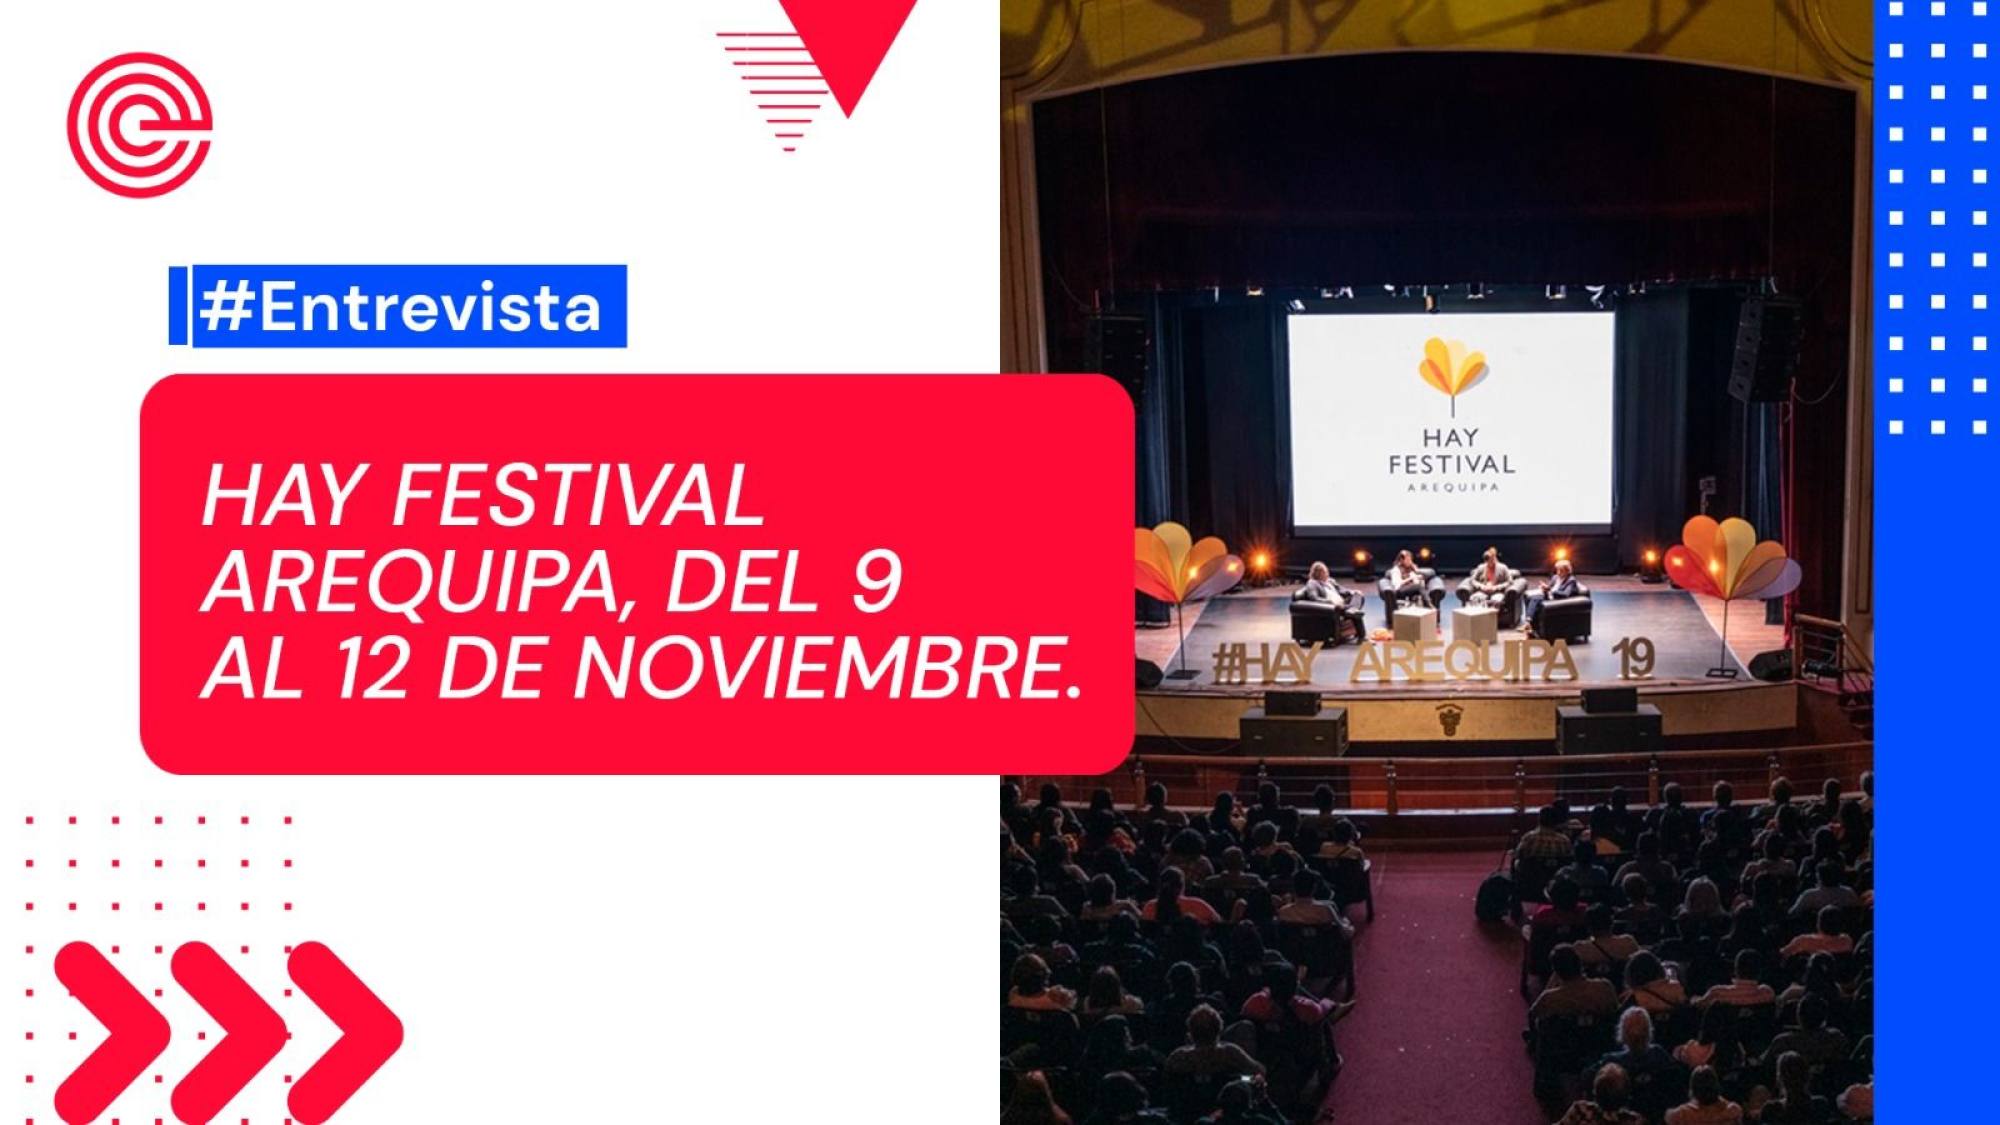 Hay Festival Arequipa: del 9 al 12 de noviembre, Epicentro TV